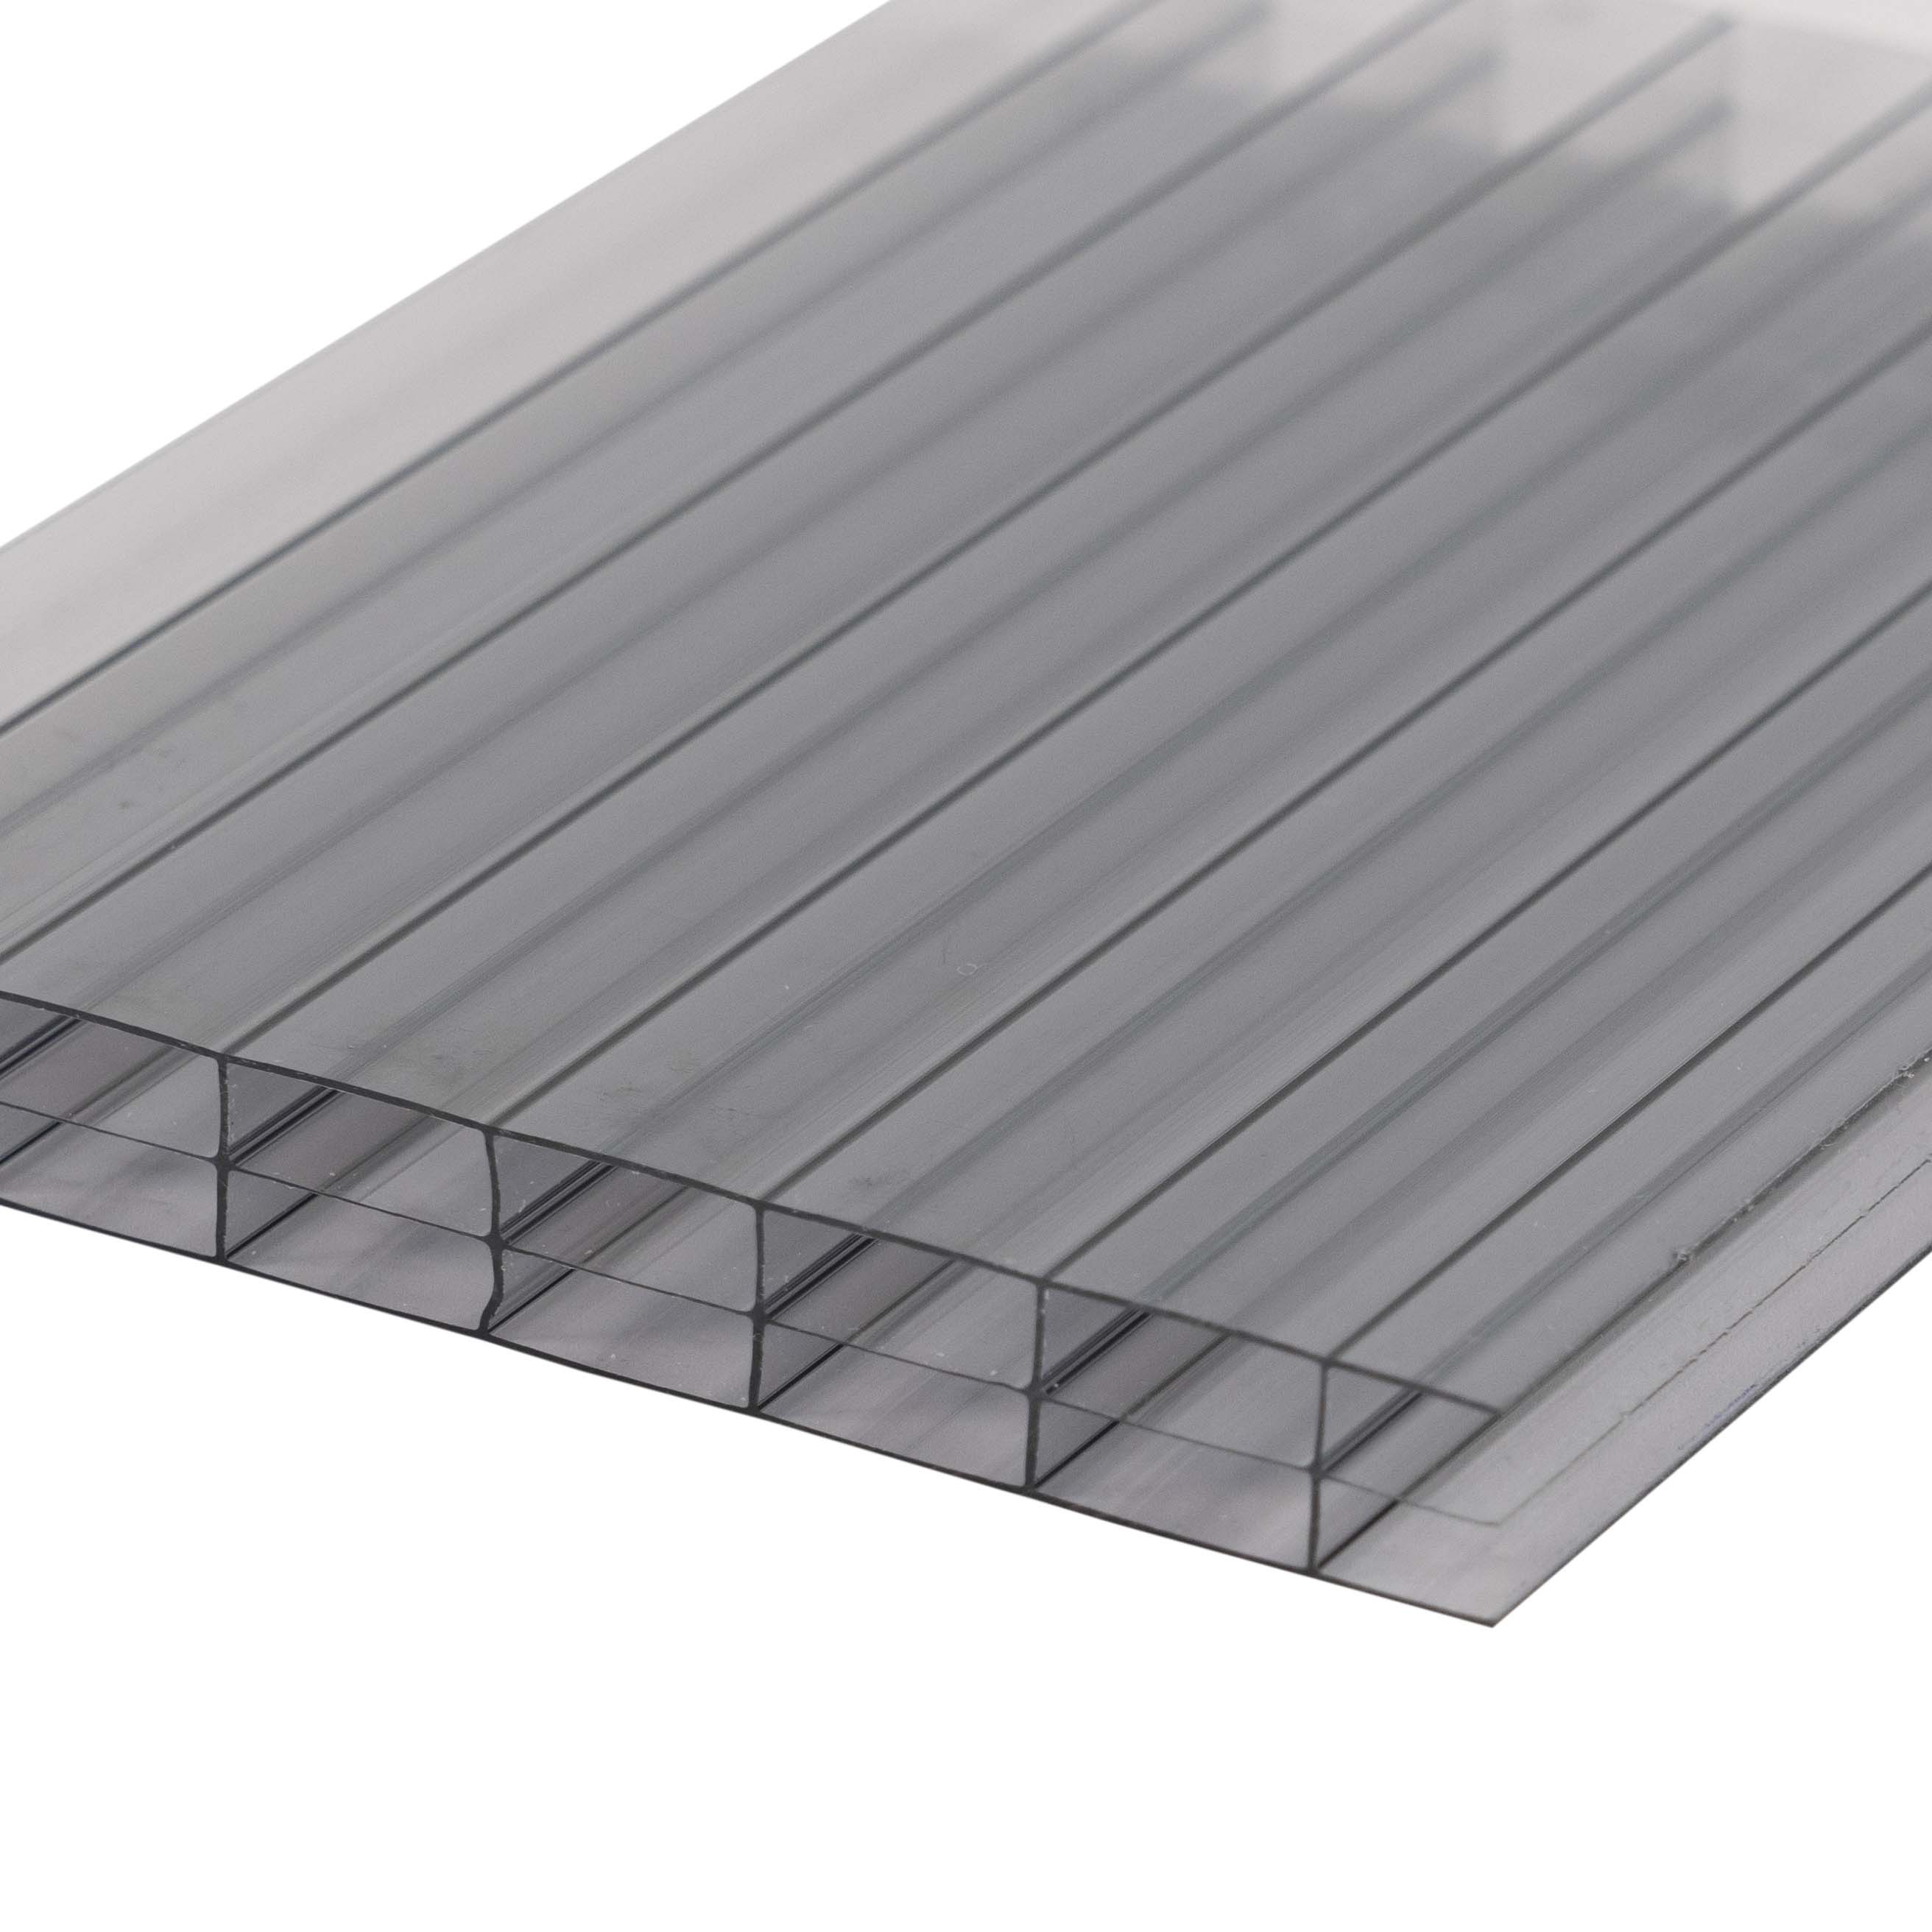 Doppelstegplatte 16 mm Anthrazit Grau - Polycarbonat Hohlkammerplatten 3-fach 